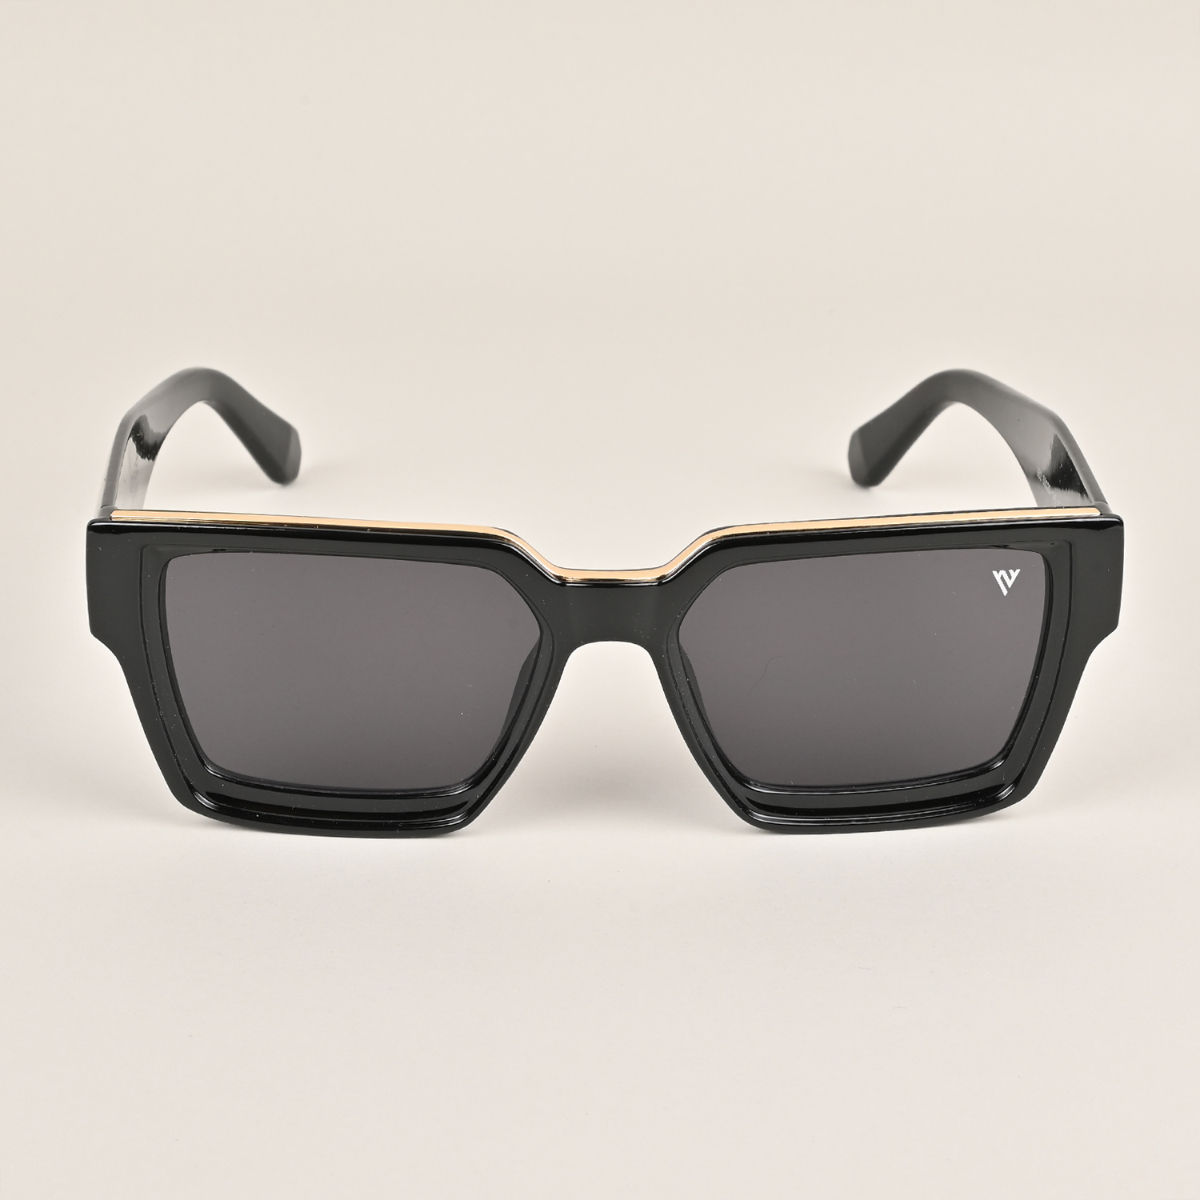 Buy Voyage Grey Wayfarer Sunglasses for Men & Women - A17Mg3935 (55) online